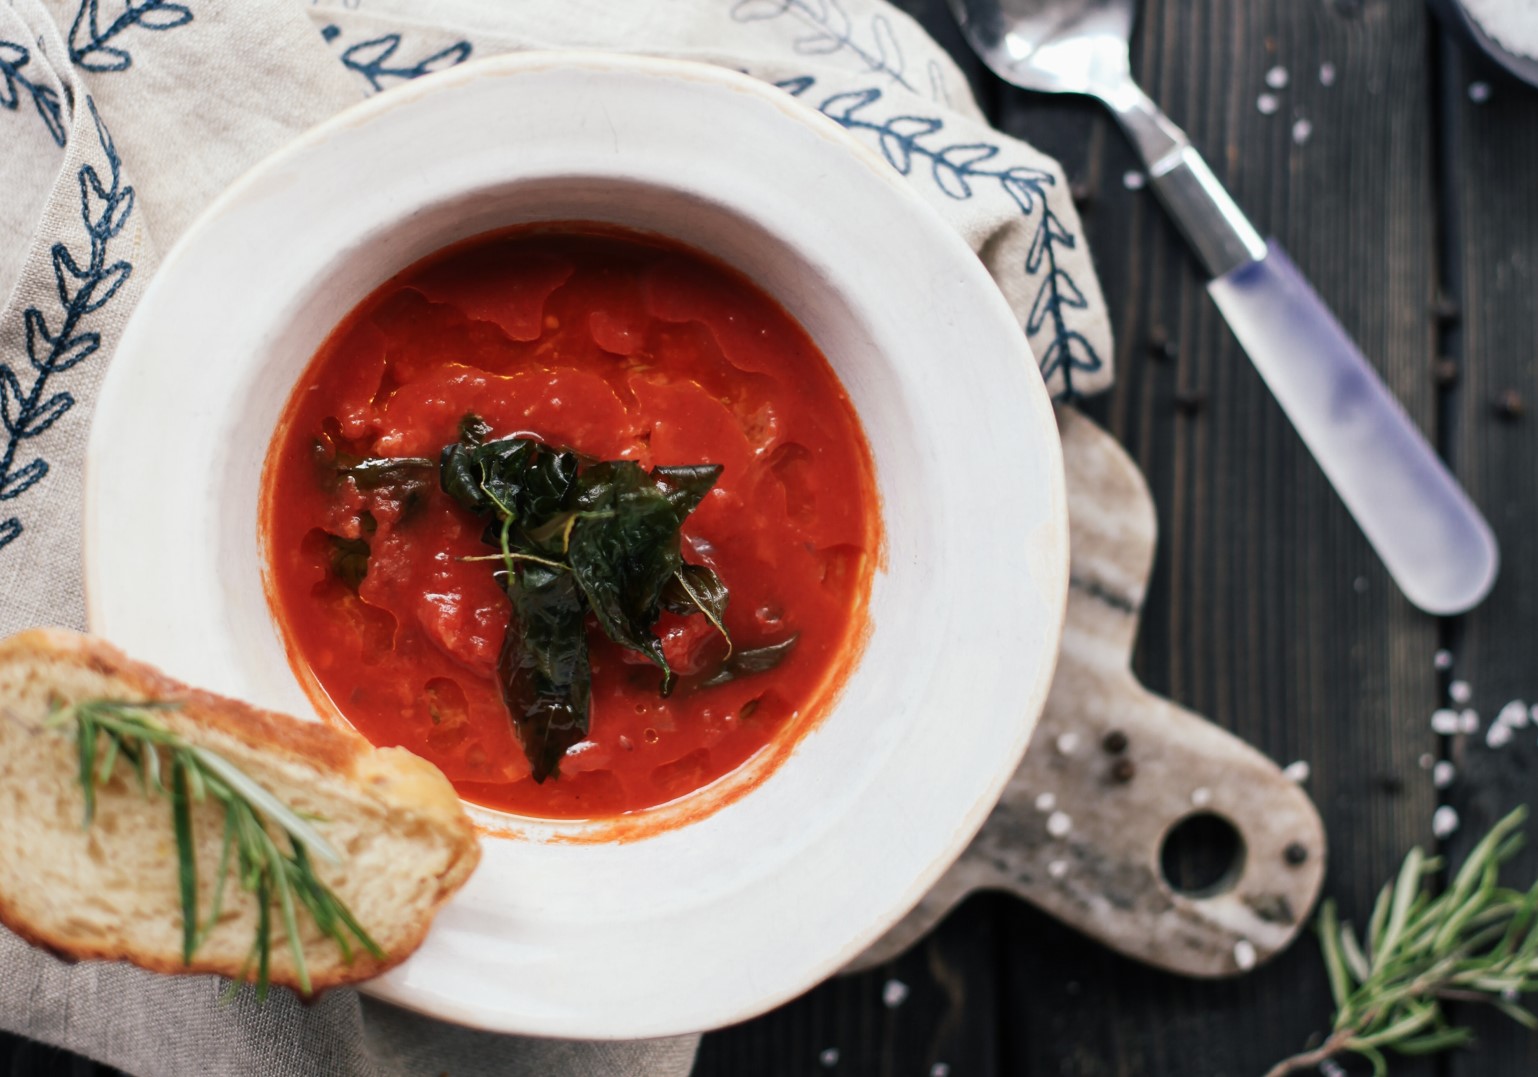 Gazpacho - a famous Spanish (Andaluzian) tomato soup